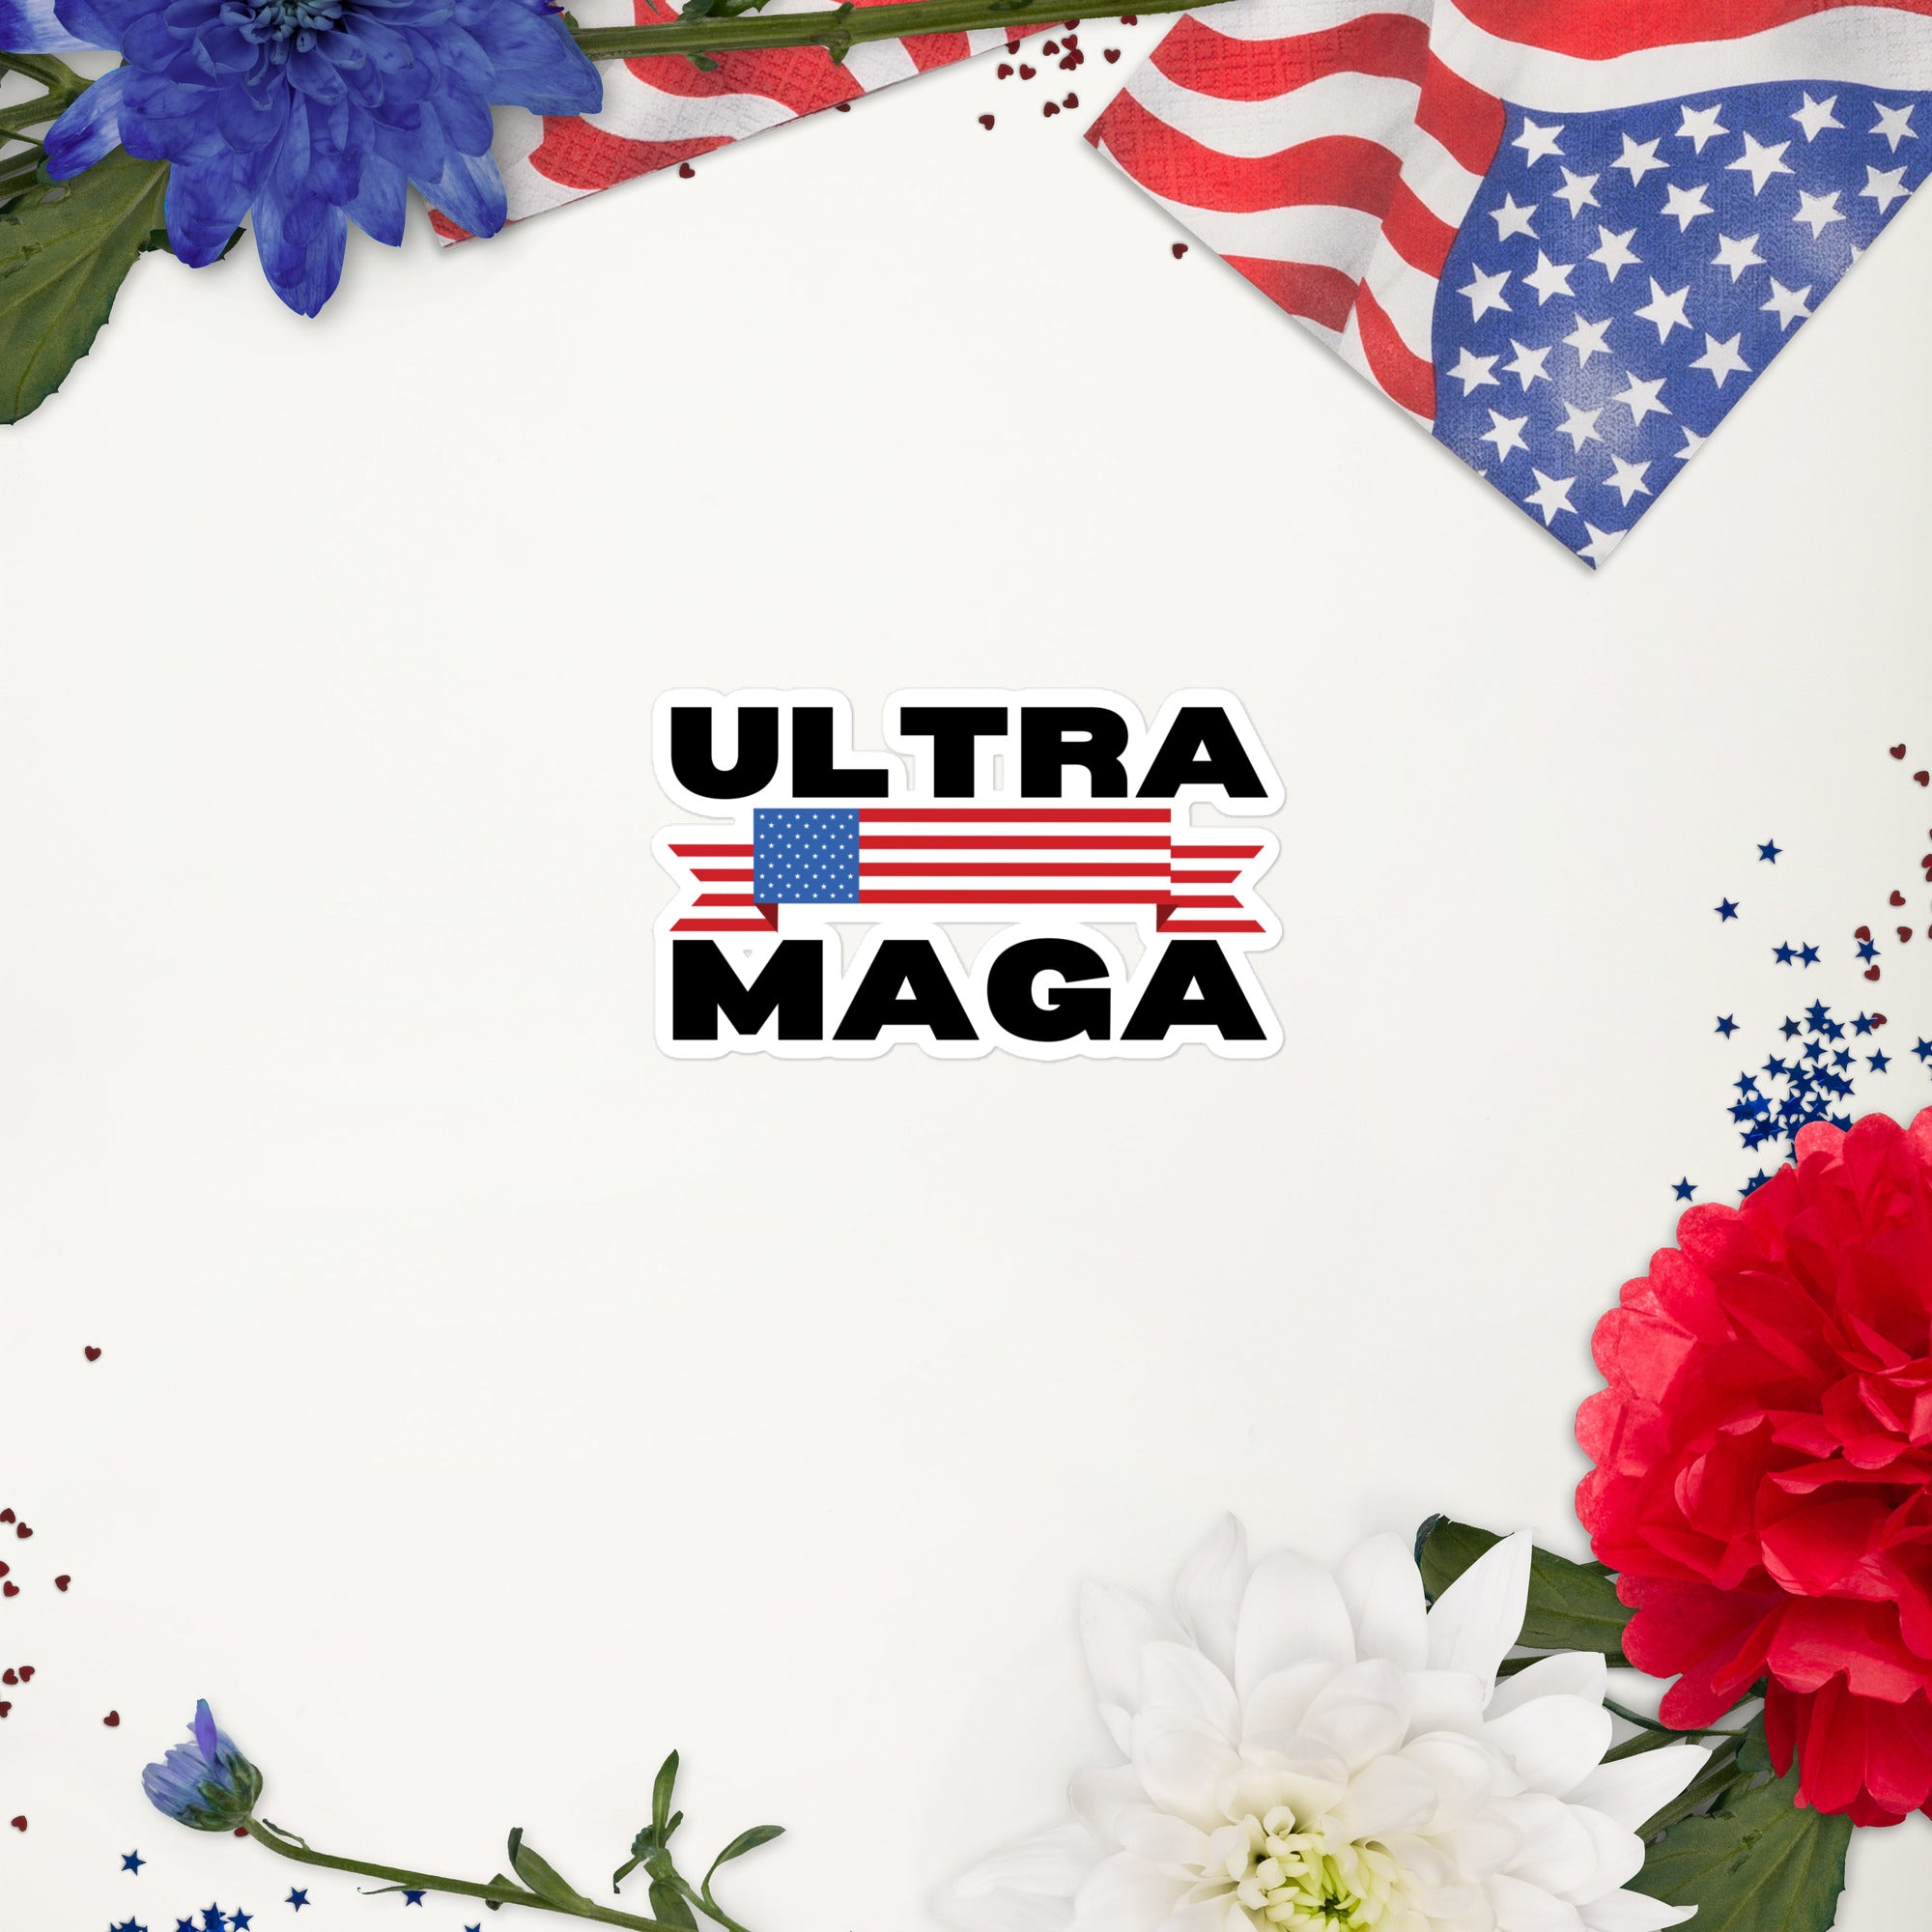 Ultra MAGA Sticker, Patriotic Gifts, Republican Stickers, Conservative Sticker, Pro Trump Republican Gift, Ultra Maga American Flag - Madeinsea©